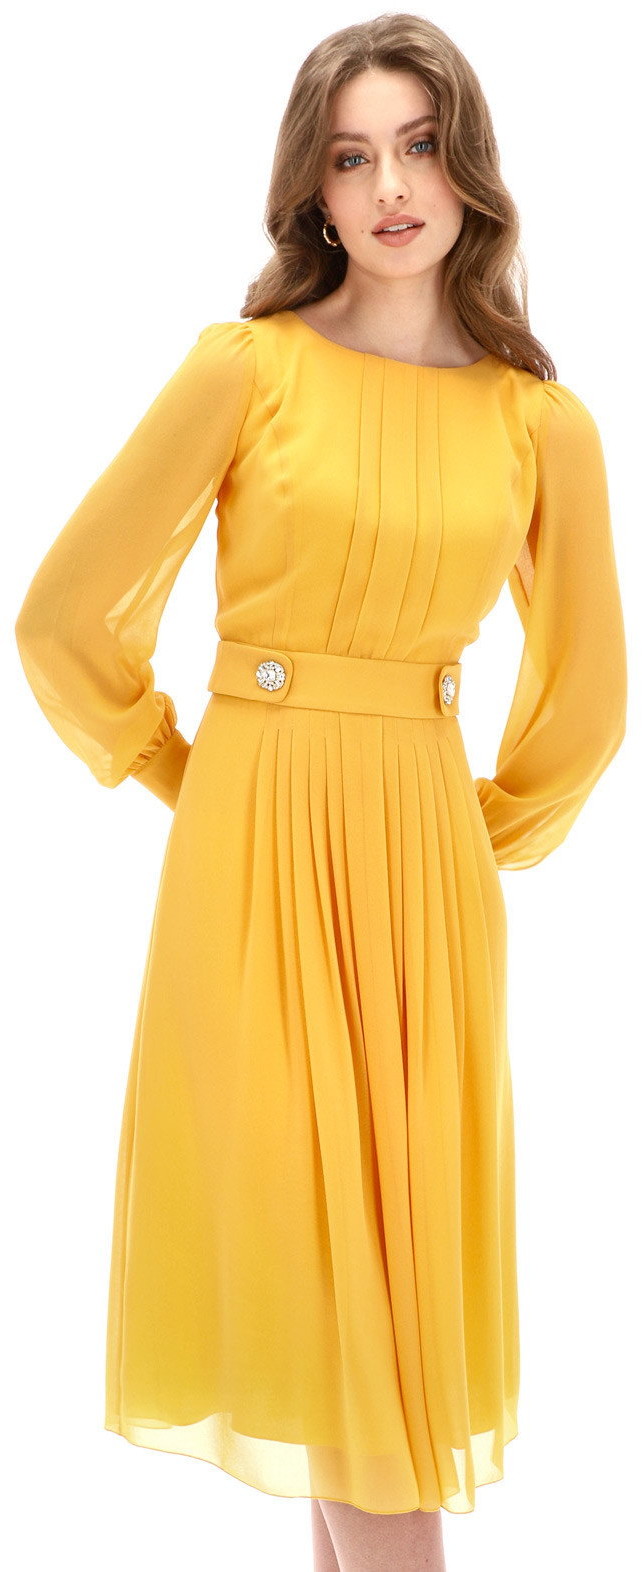 Potis&Verso Żółta sukienka wizytowa z zakładkami Potis&Verso Queen -